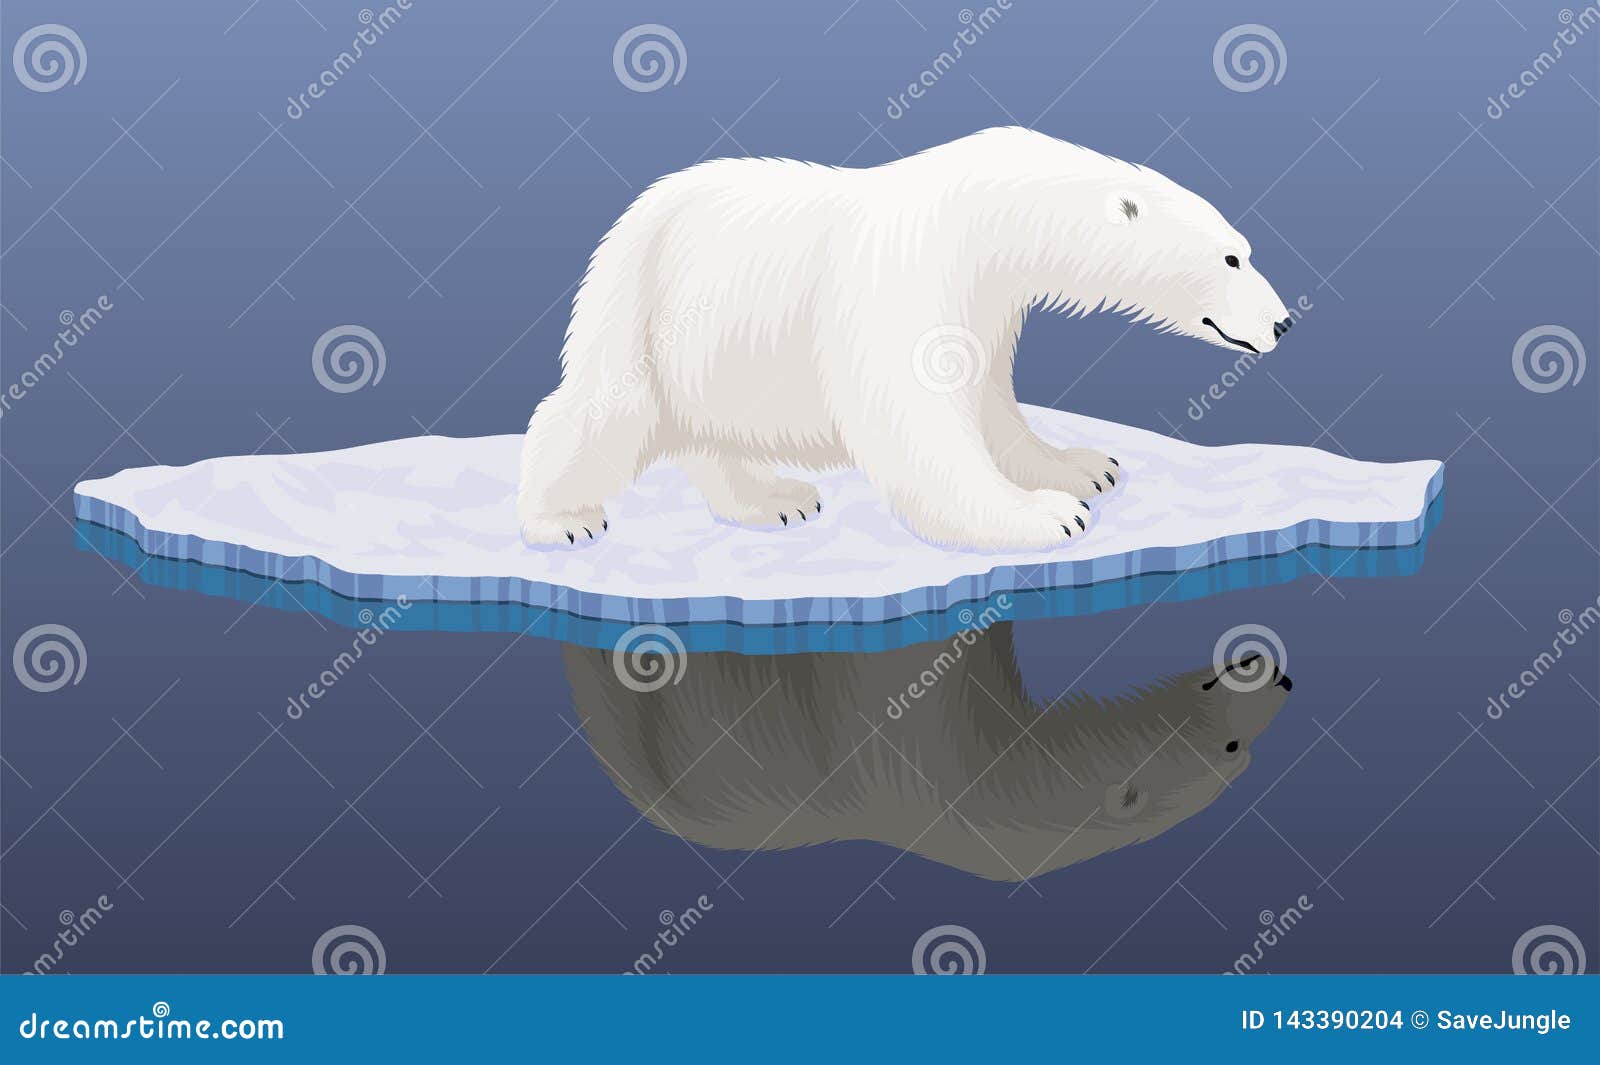  polar bear on an ice floe in antarctica  - climate change catastrophe